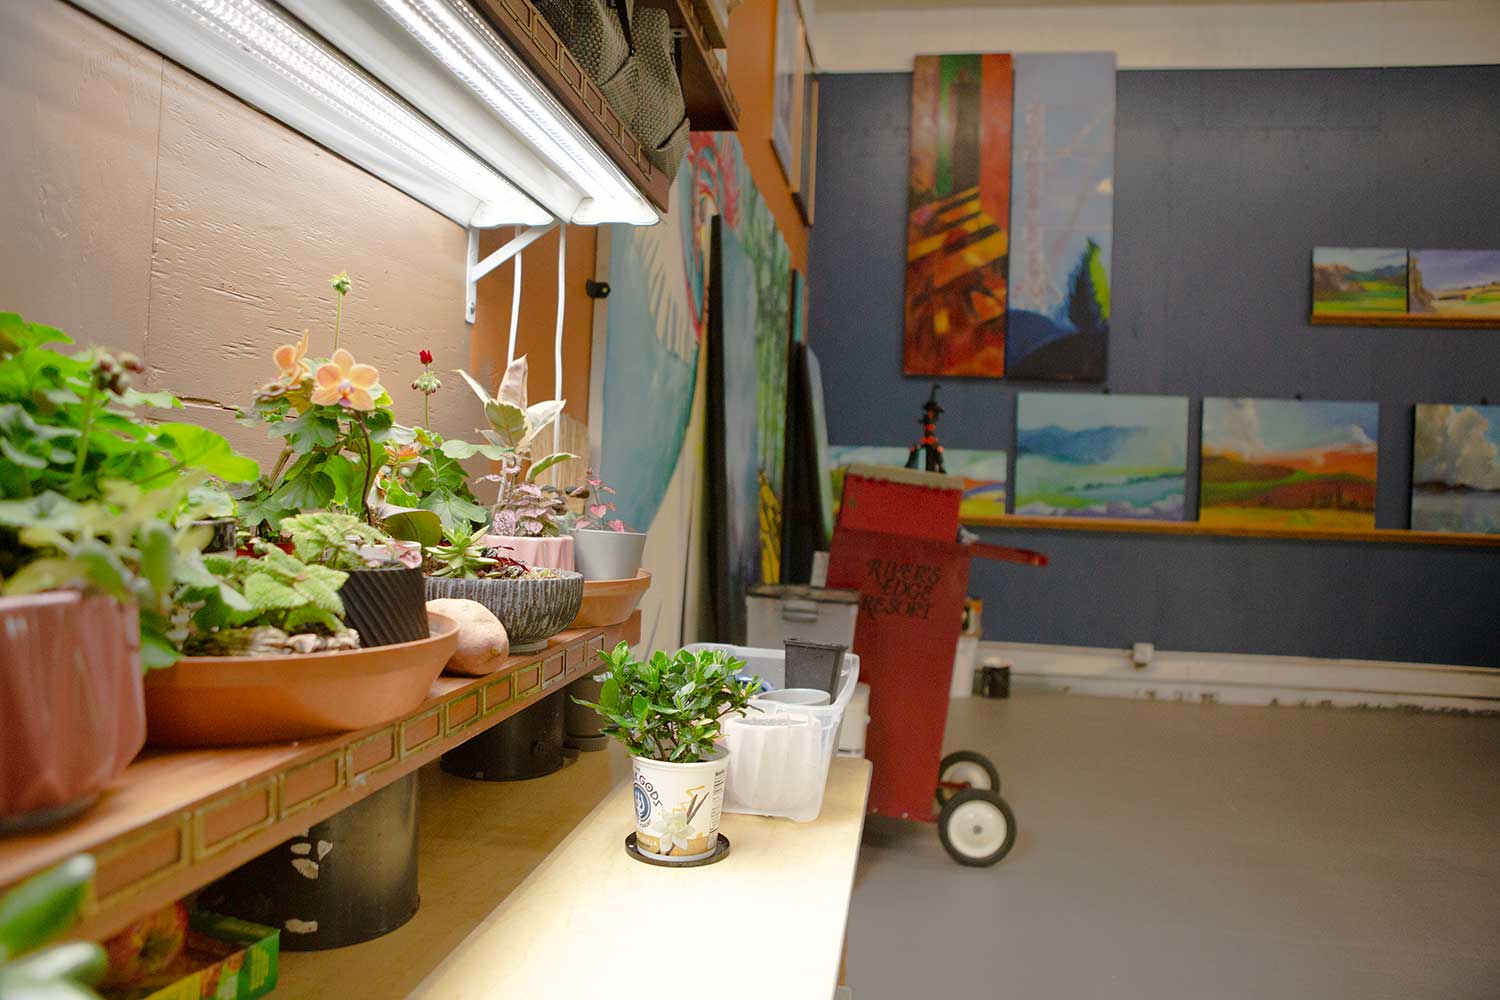 Donna's art studio ~ plants and art!